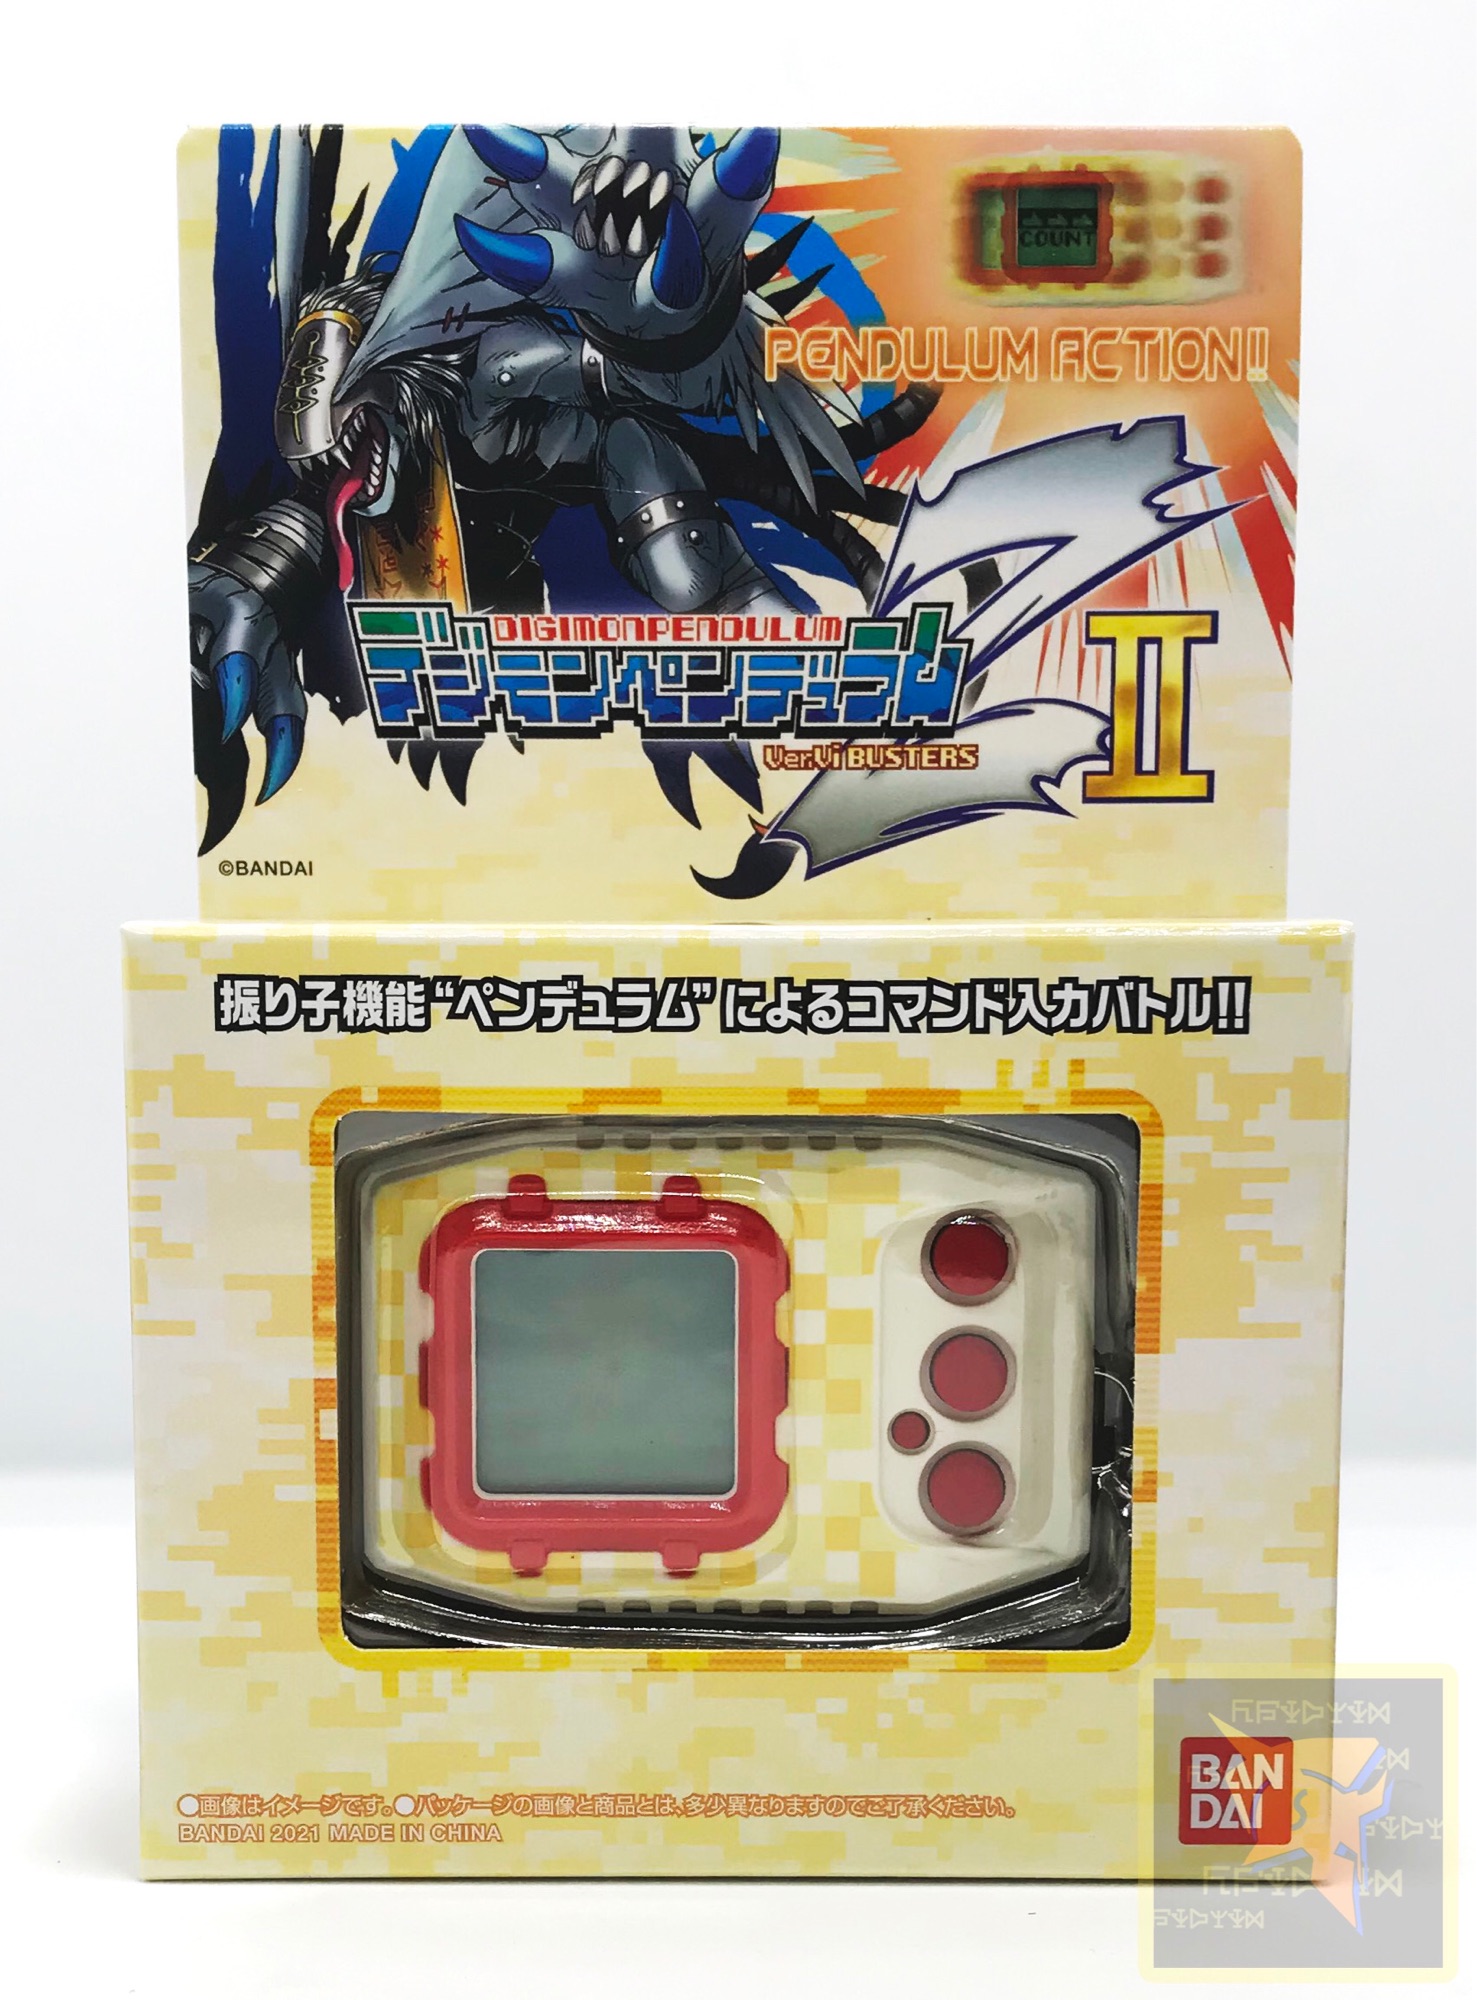 Digimon Pendulum Z II Virus Buster พร้อมส่งใน 2 ชม. มีบริการเชื่อมปลดตัวพิ